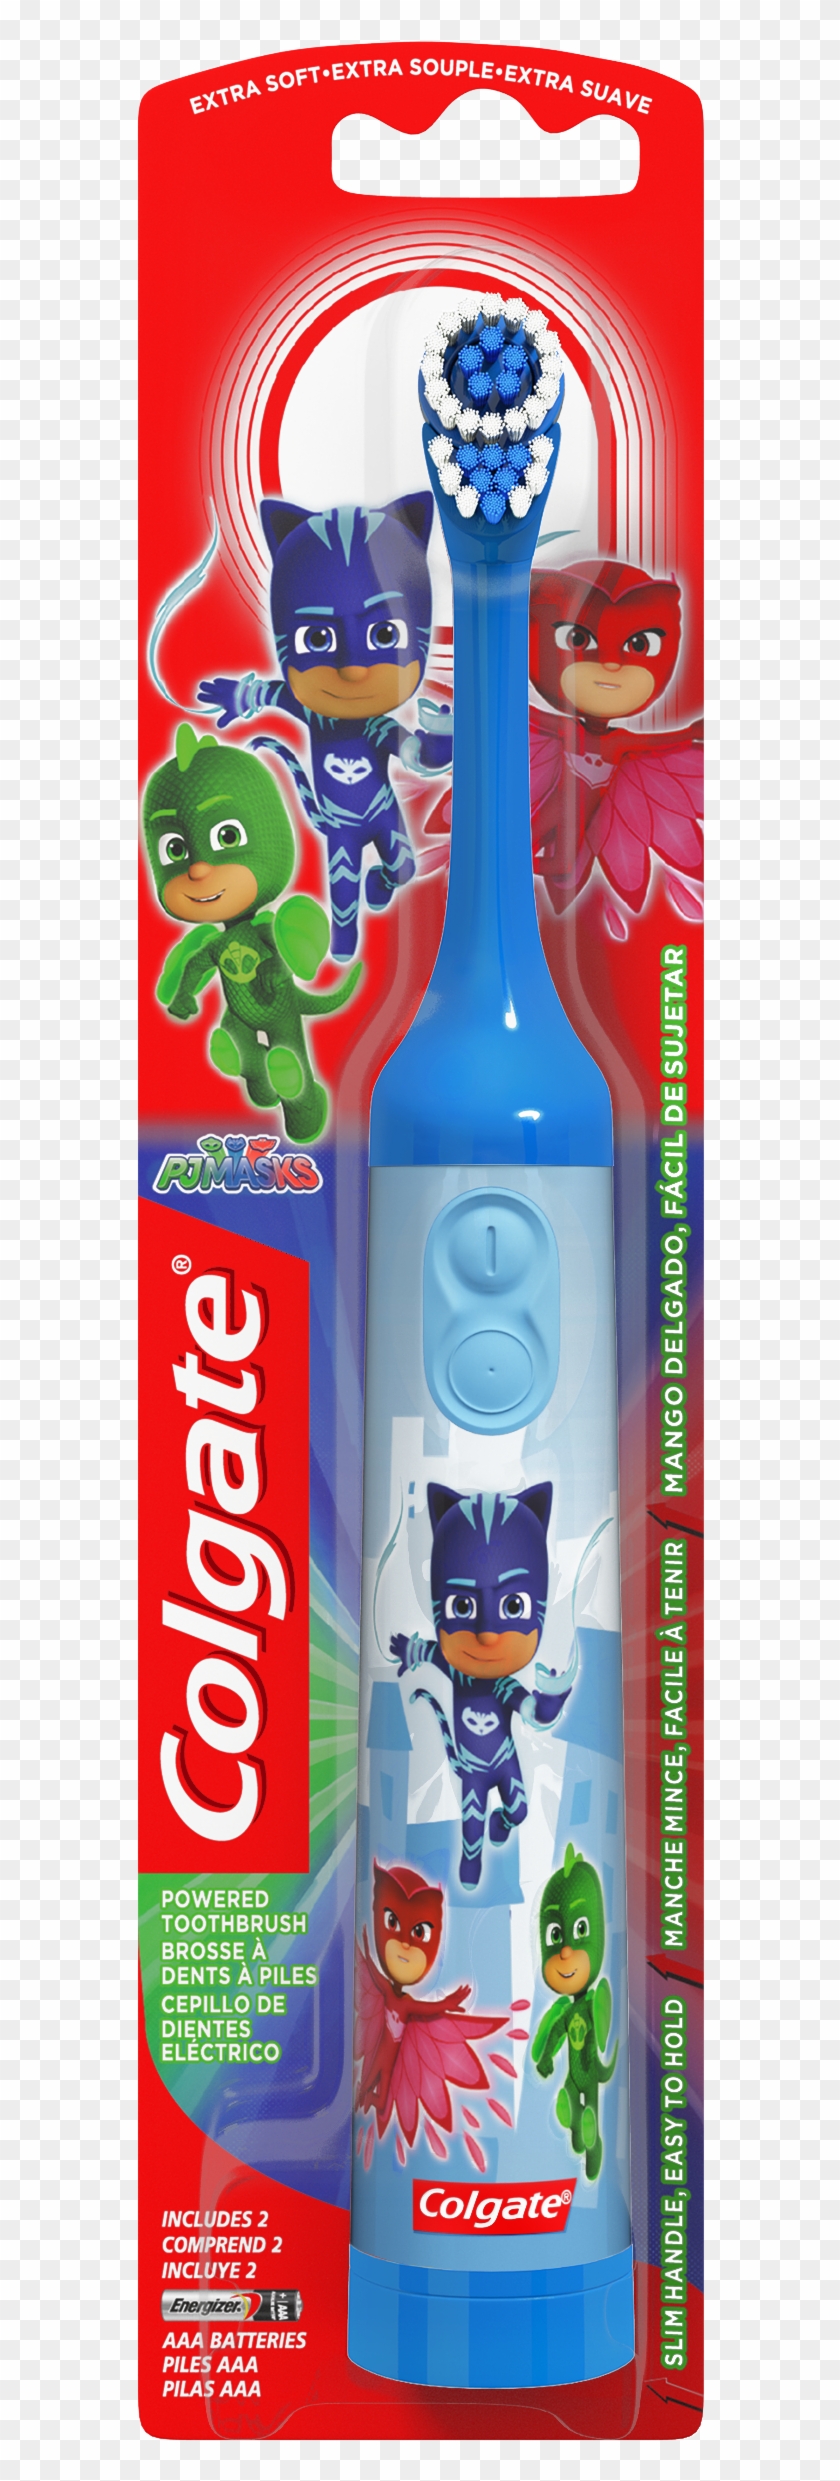 Colgate Kids Battery Powered Toothbrush, Pj Masks - Colgate Clipart